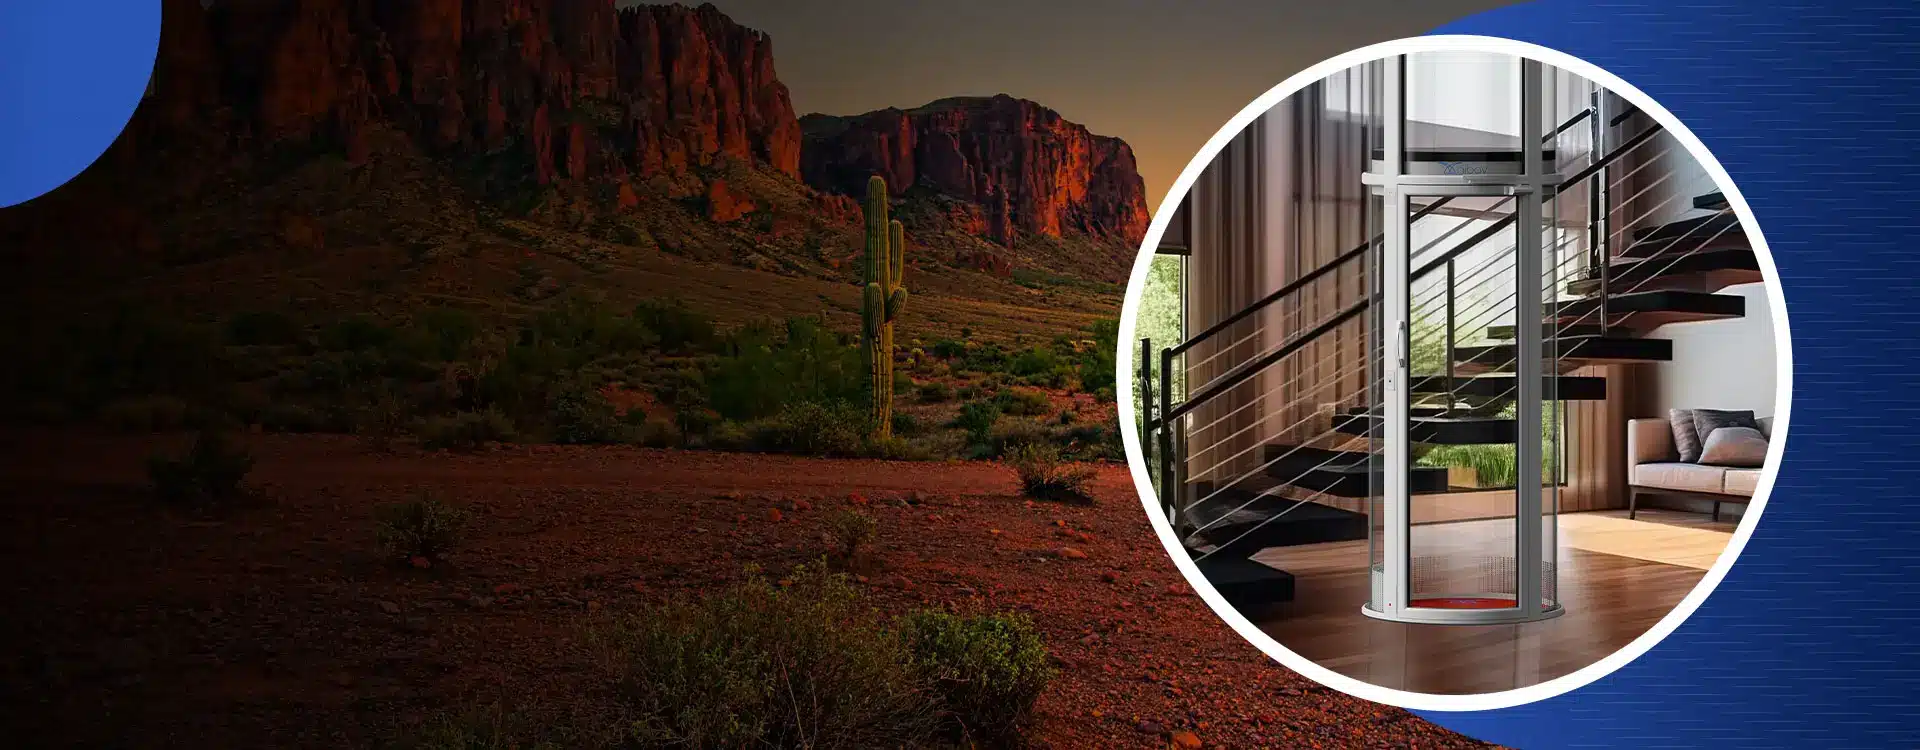 Domestic Lifts in Arizona - Nibav Lifts USA